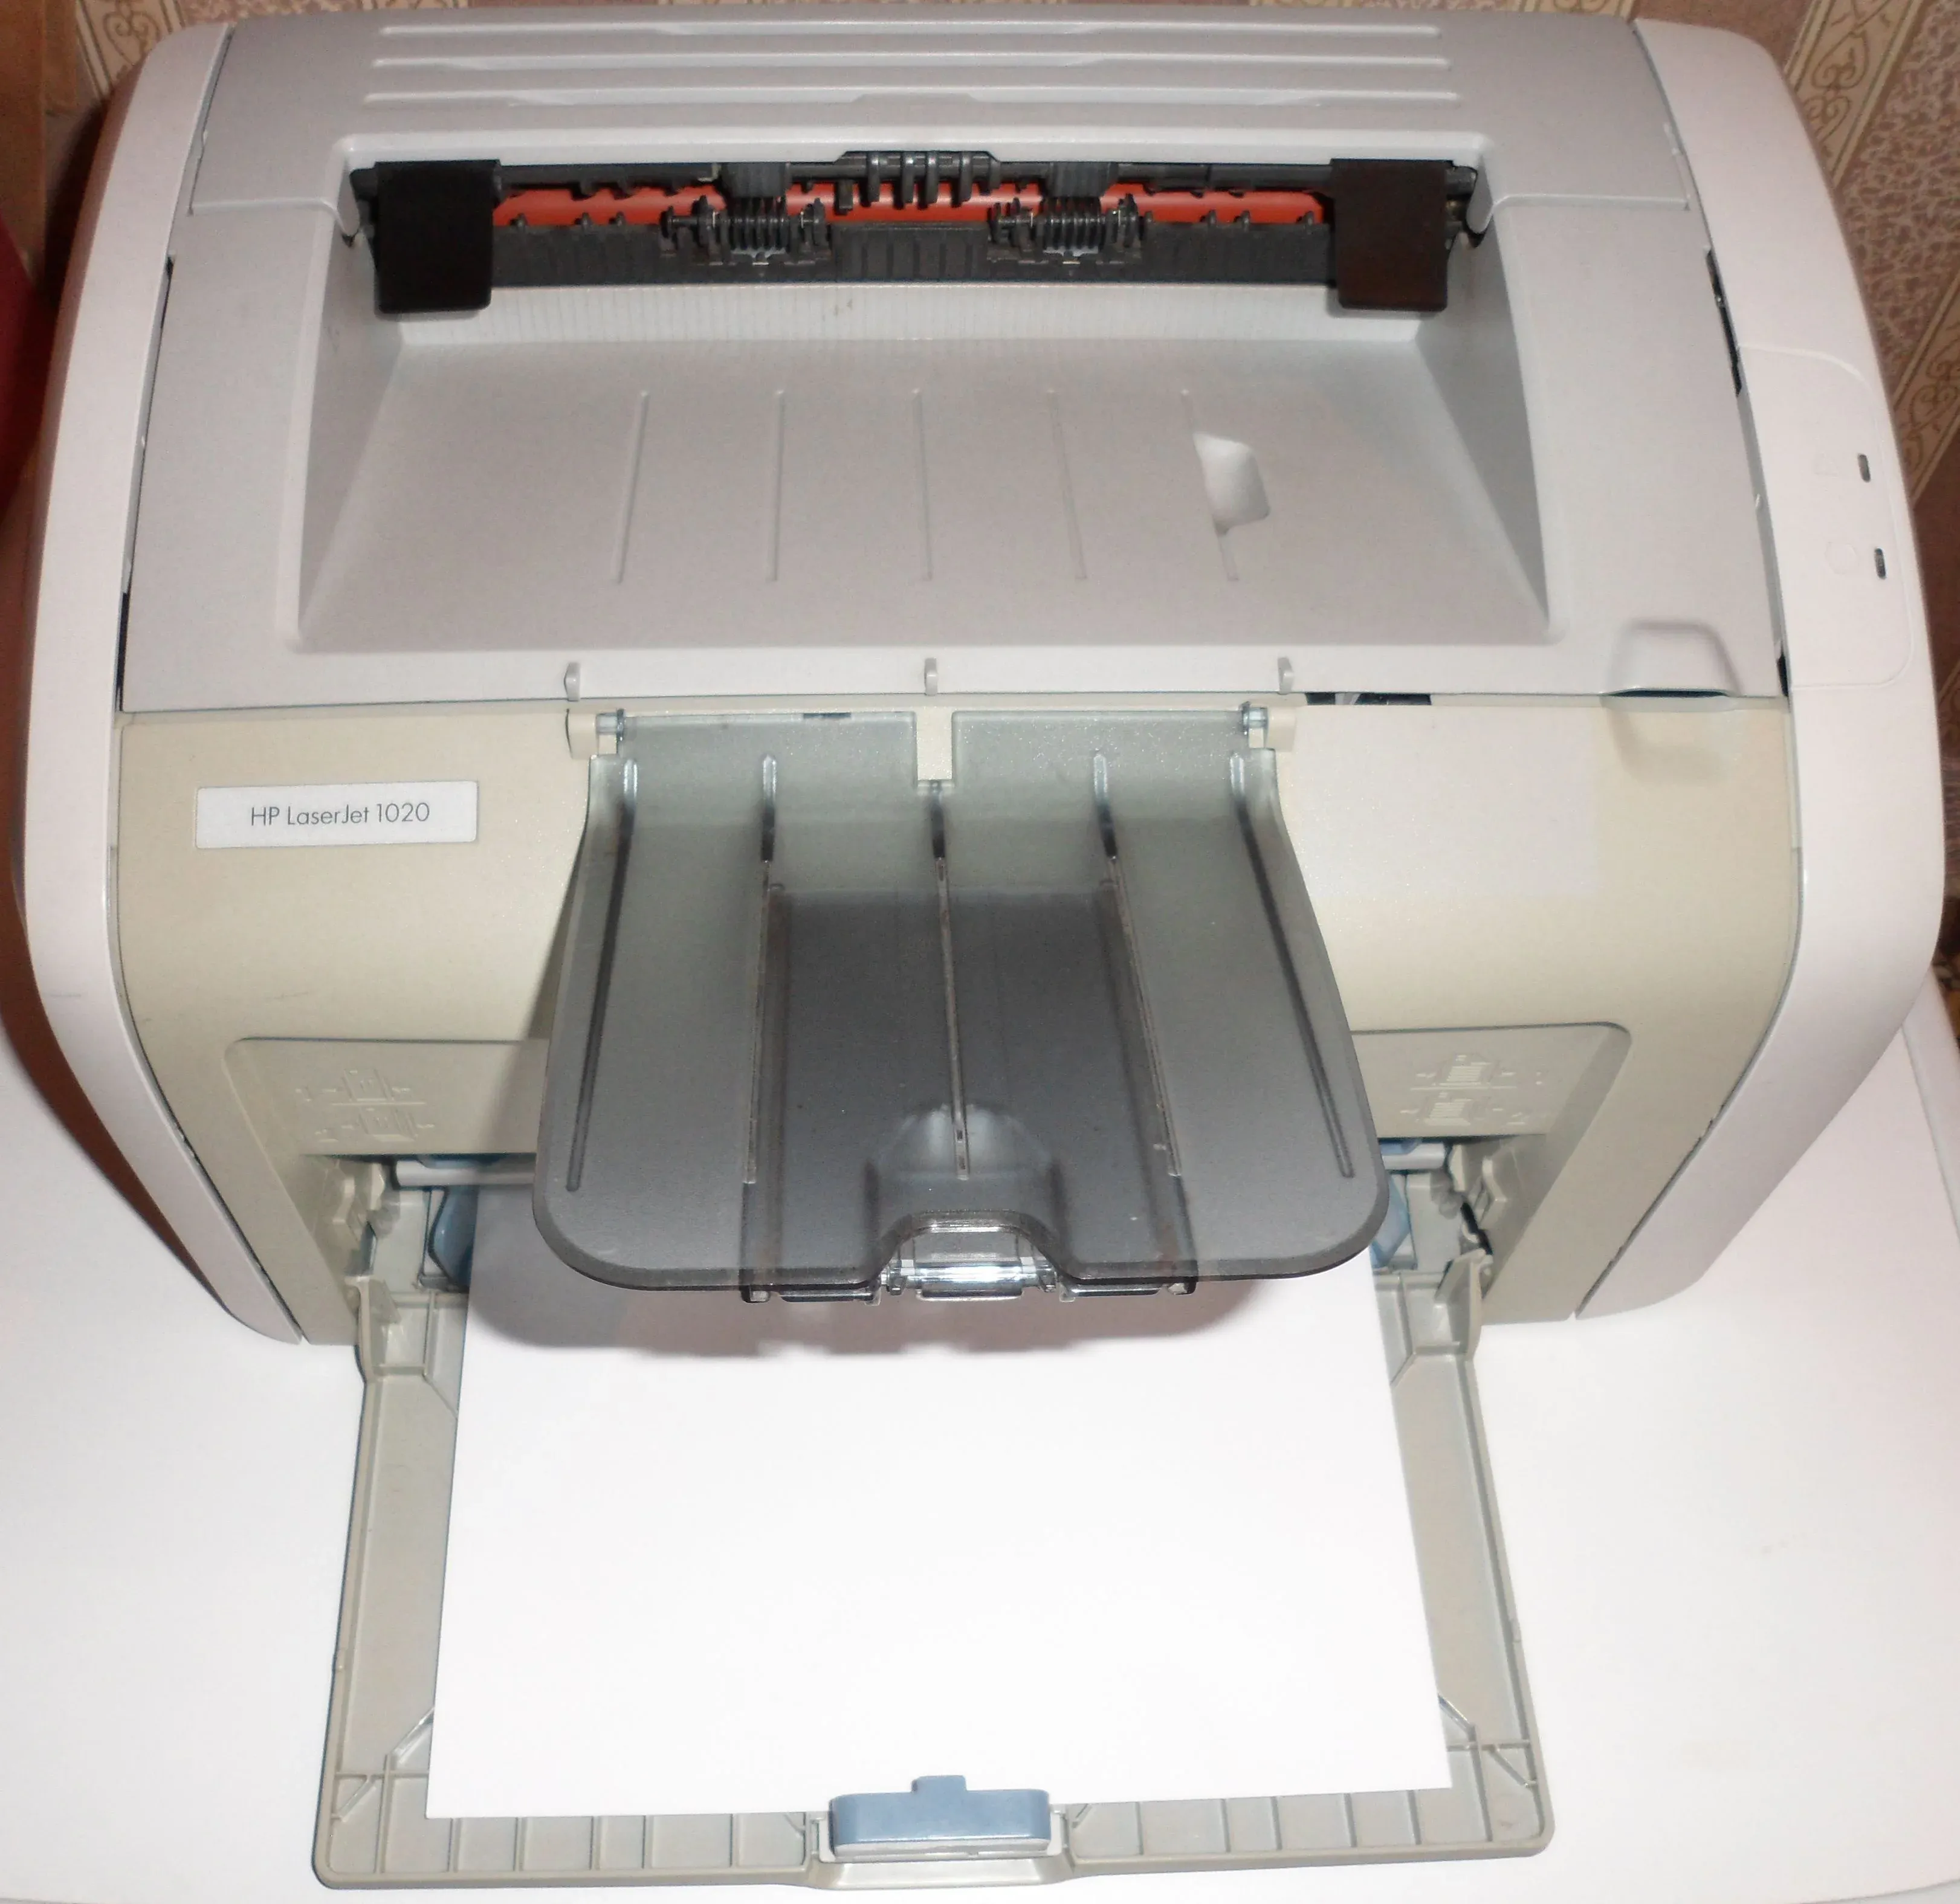 Купить принтер laserjet 1020